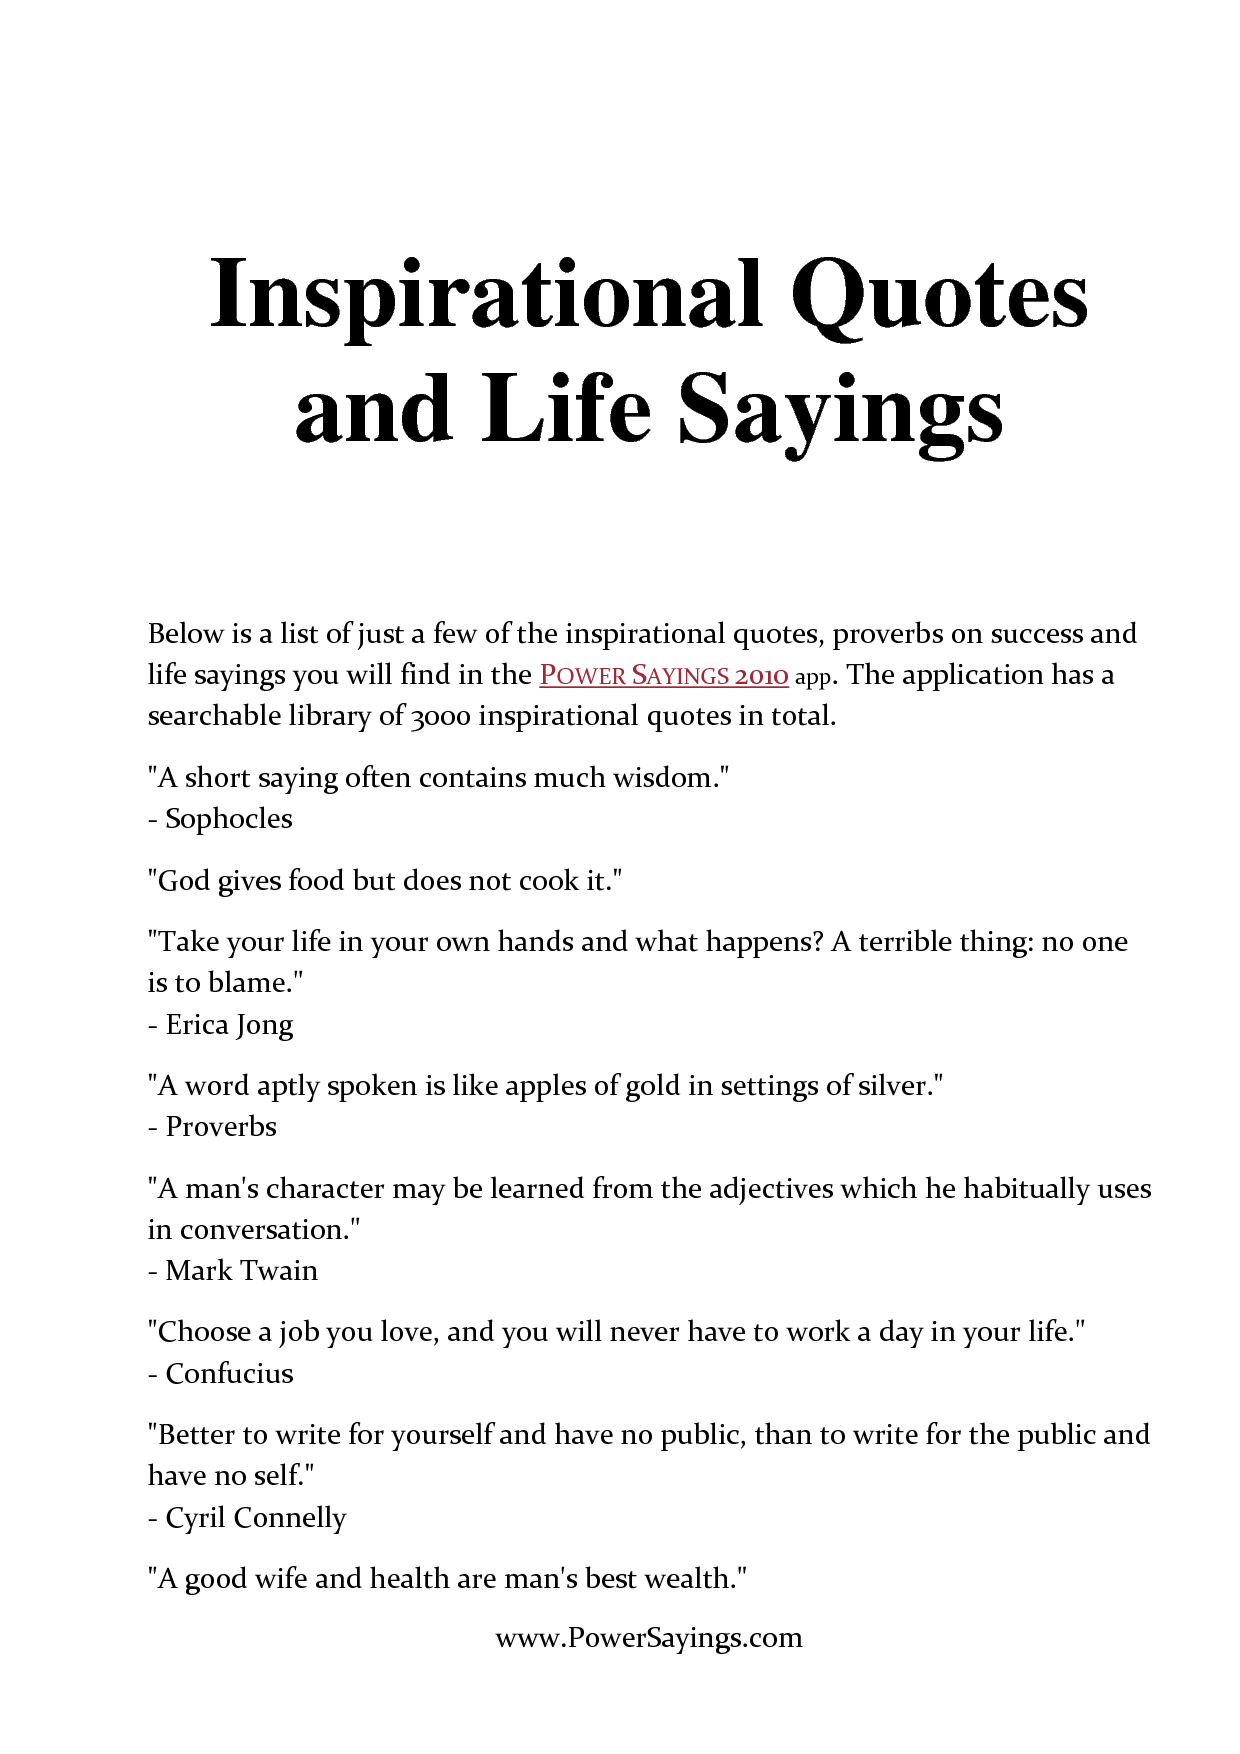 Inspirational Quotes Sayings Life 16